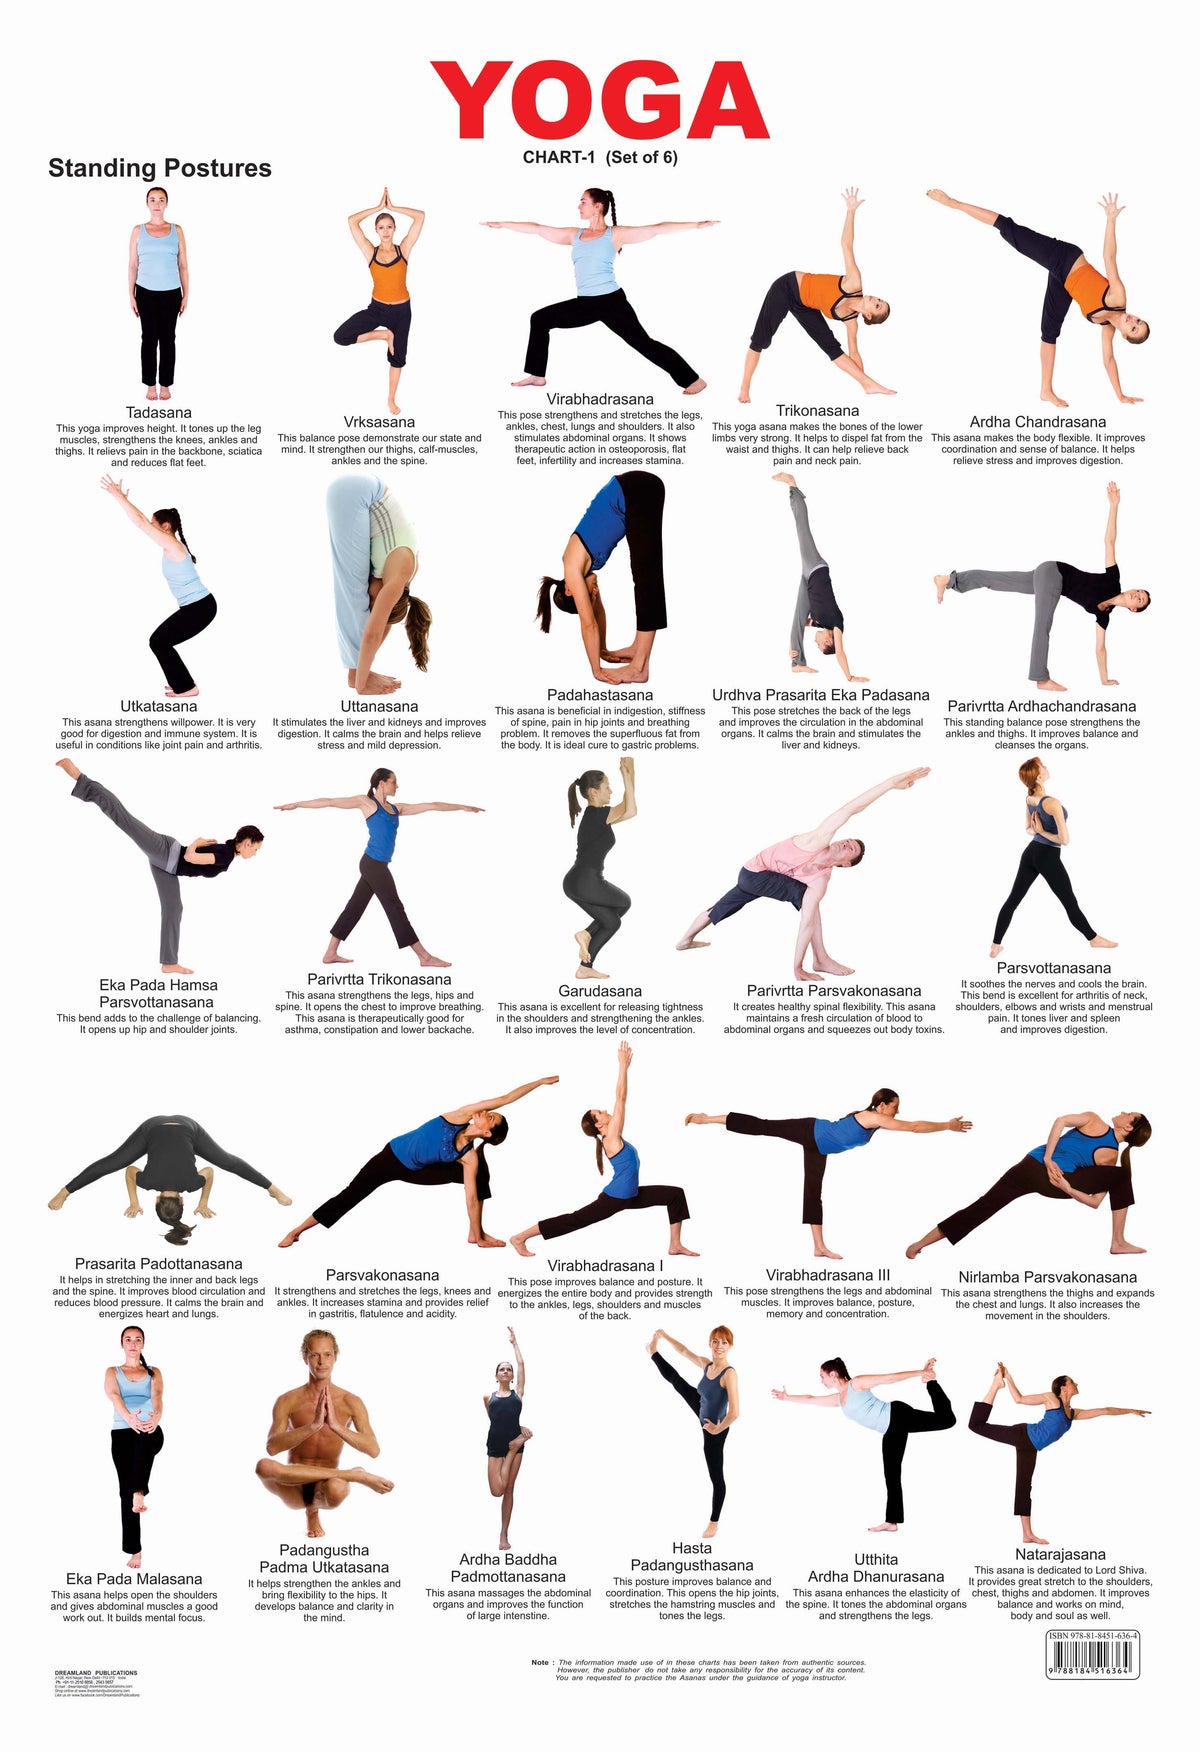 The 26 Bikram Yoga Poses + Free Cheat Sheet